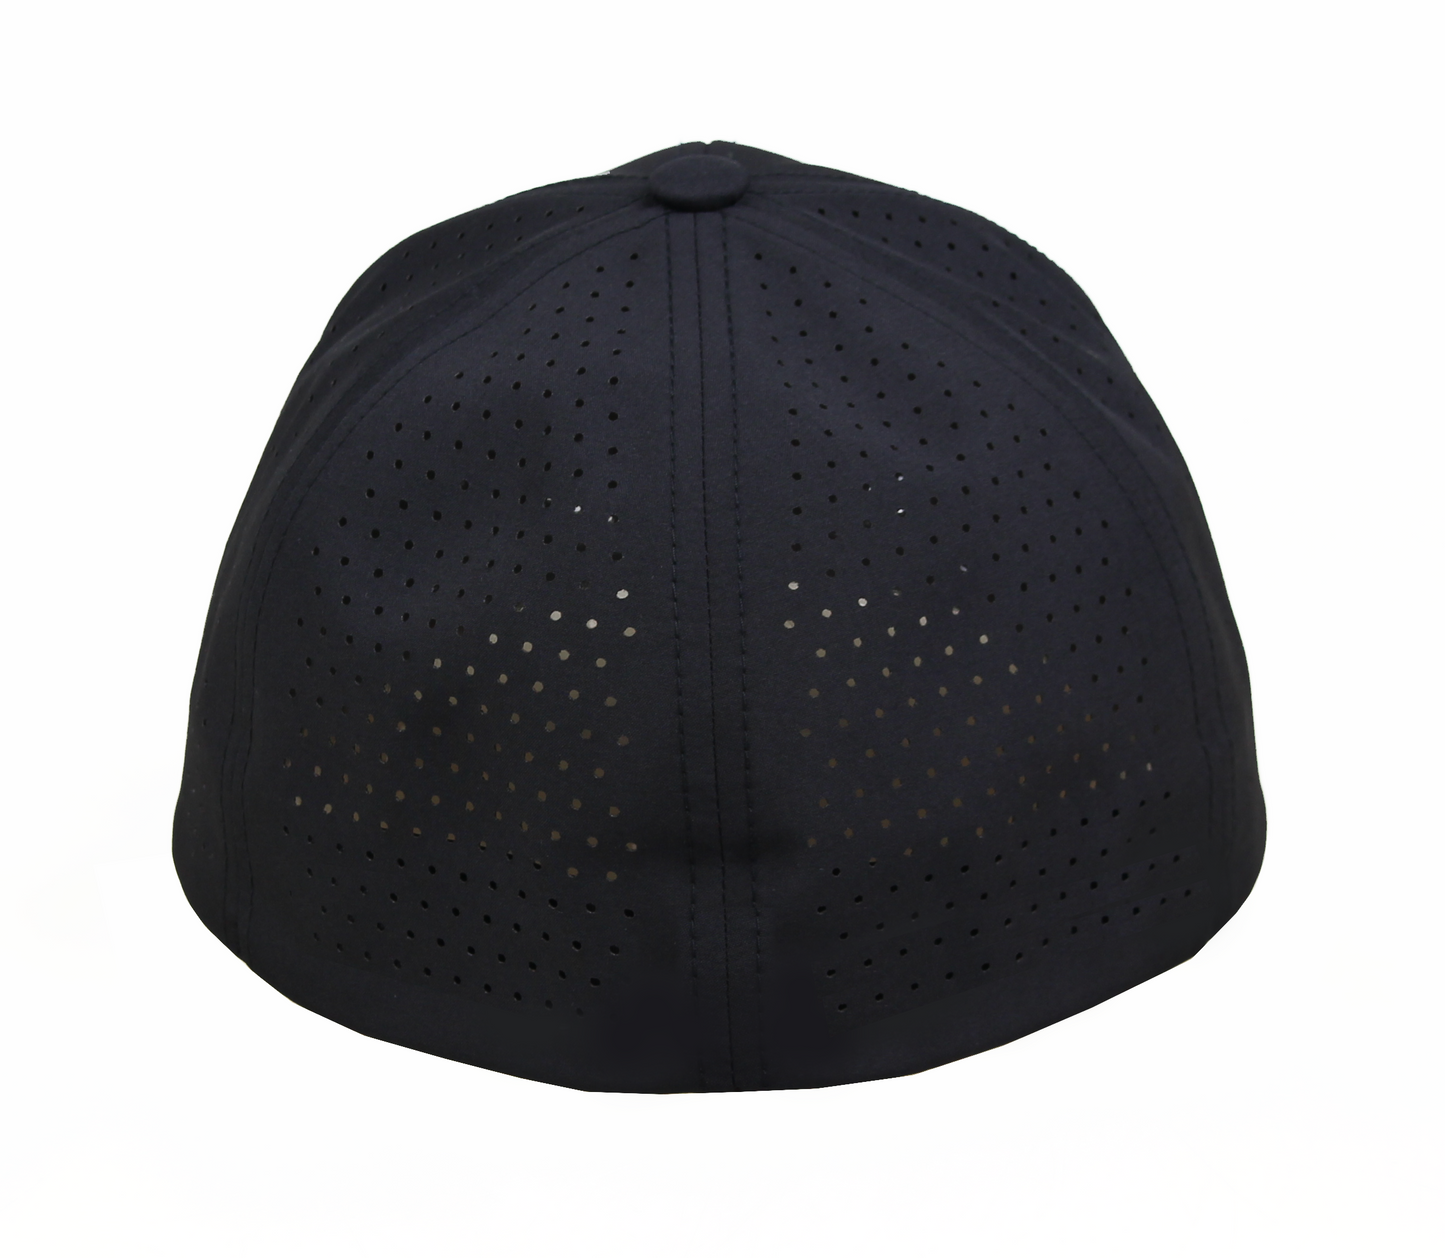 NEW Linerz CushCap™ Bump Cap Hats now in stock!